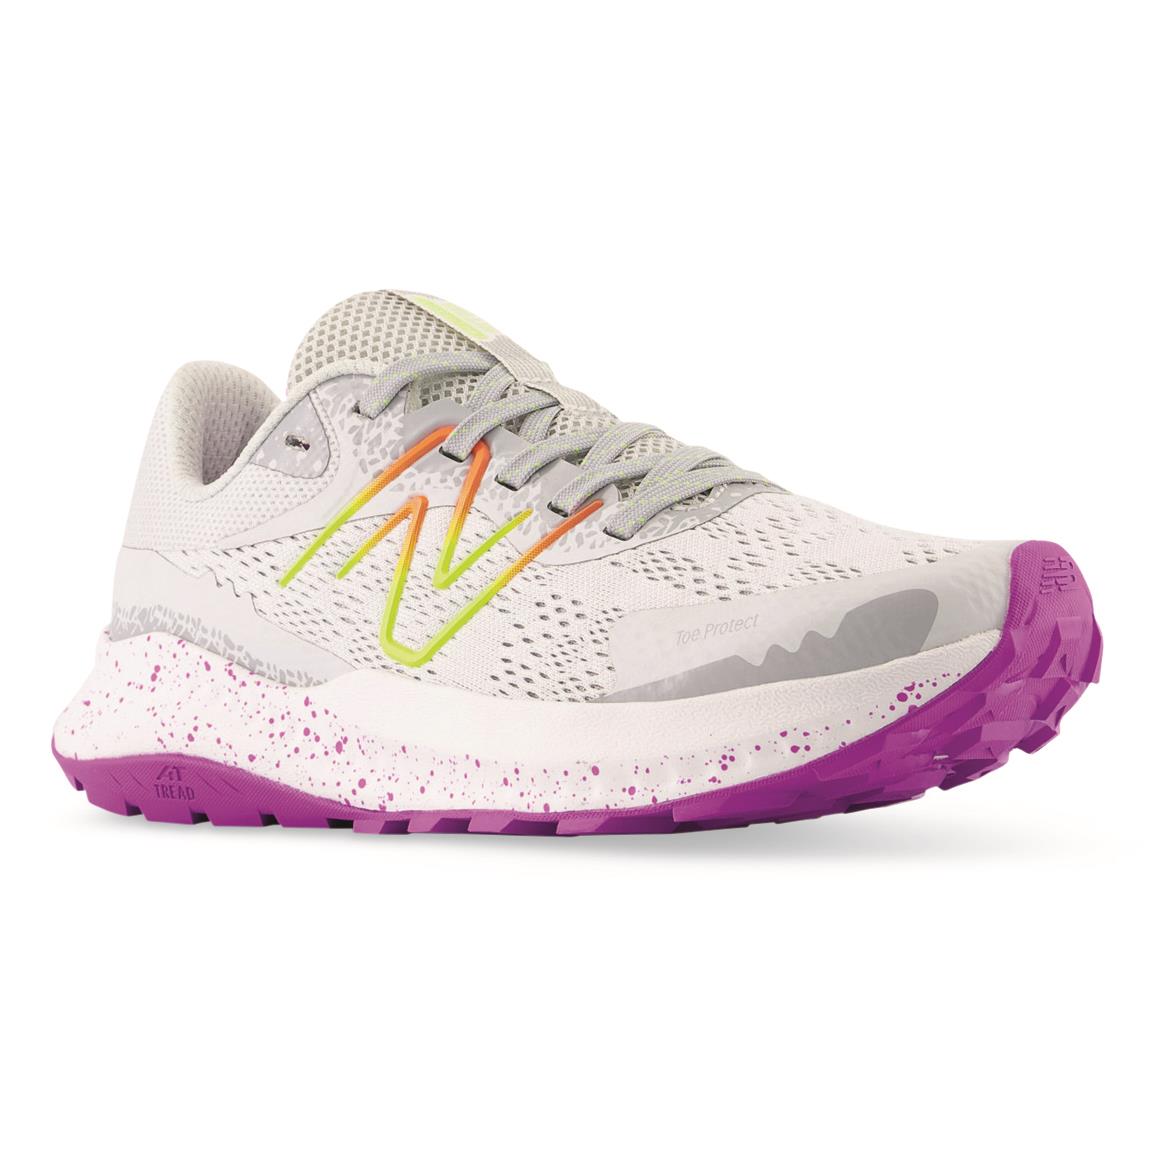 New Balance Women's DynaSoft Nitrel V5 Trail Shoes, Quartz Grey